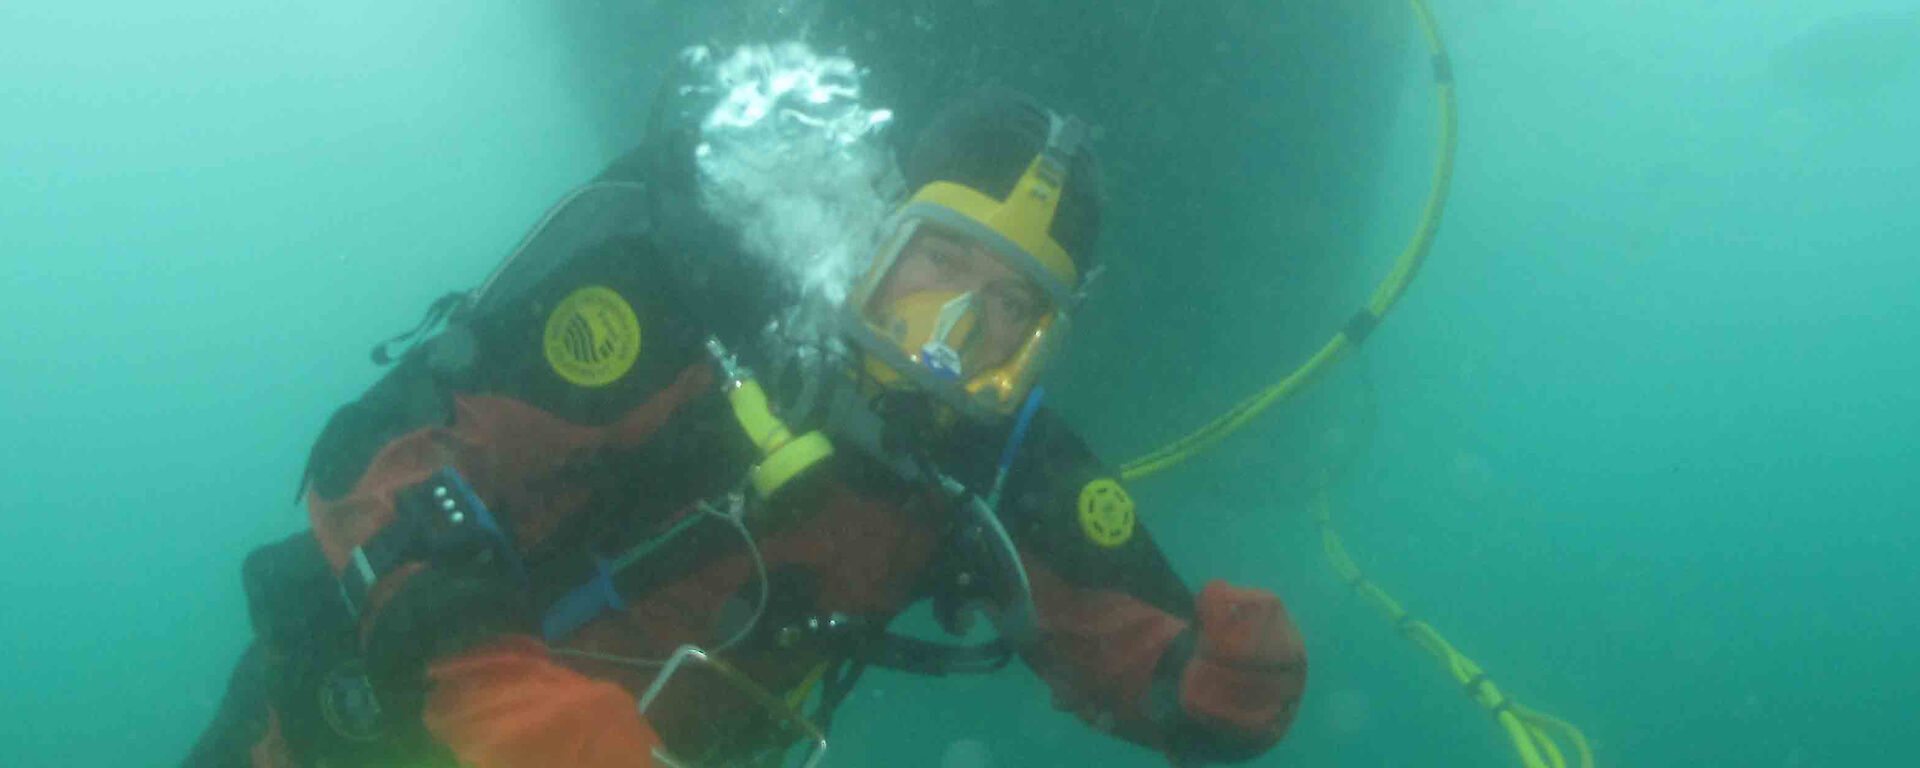 Diver ascending with a bag of samples